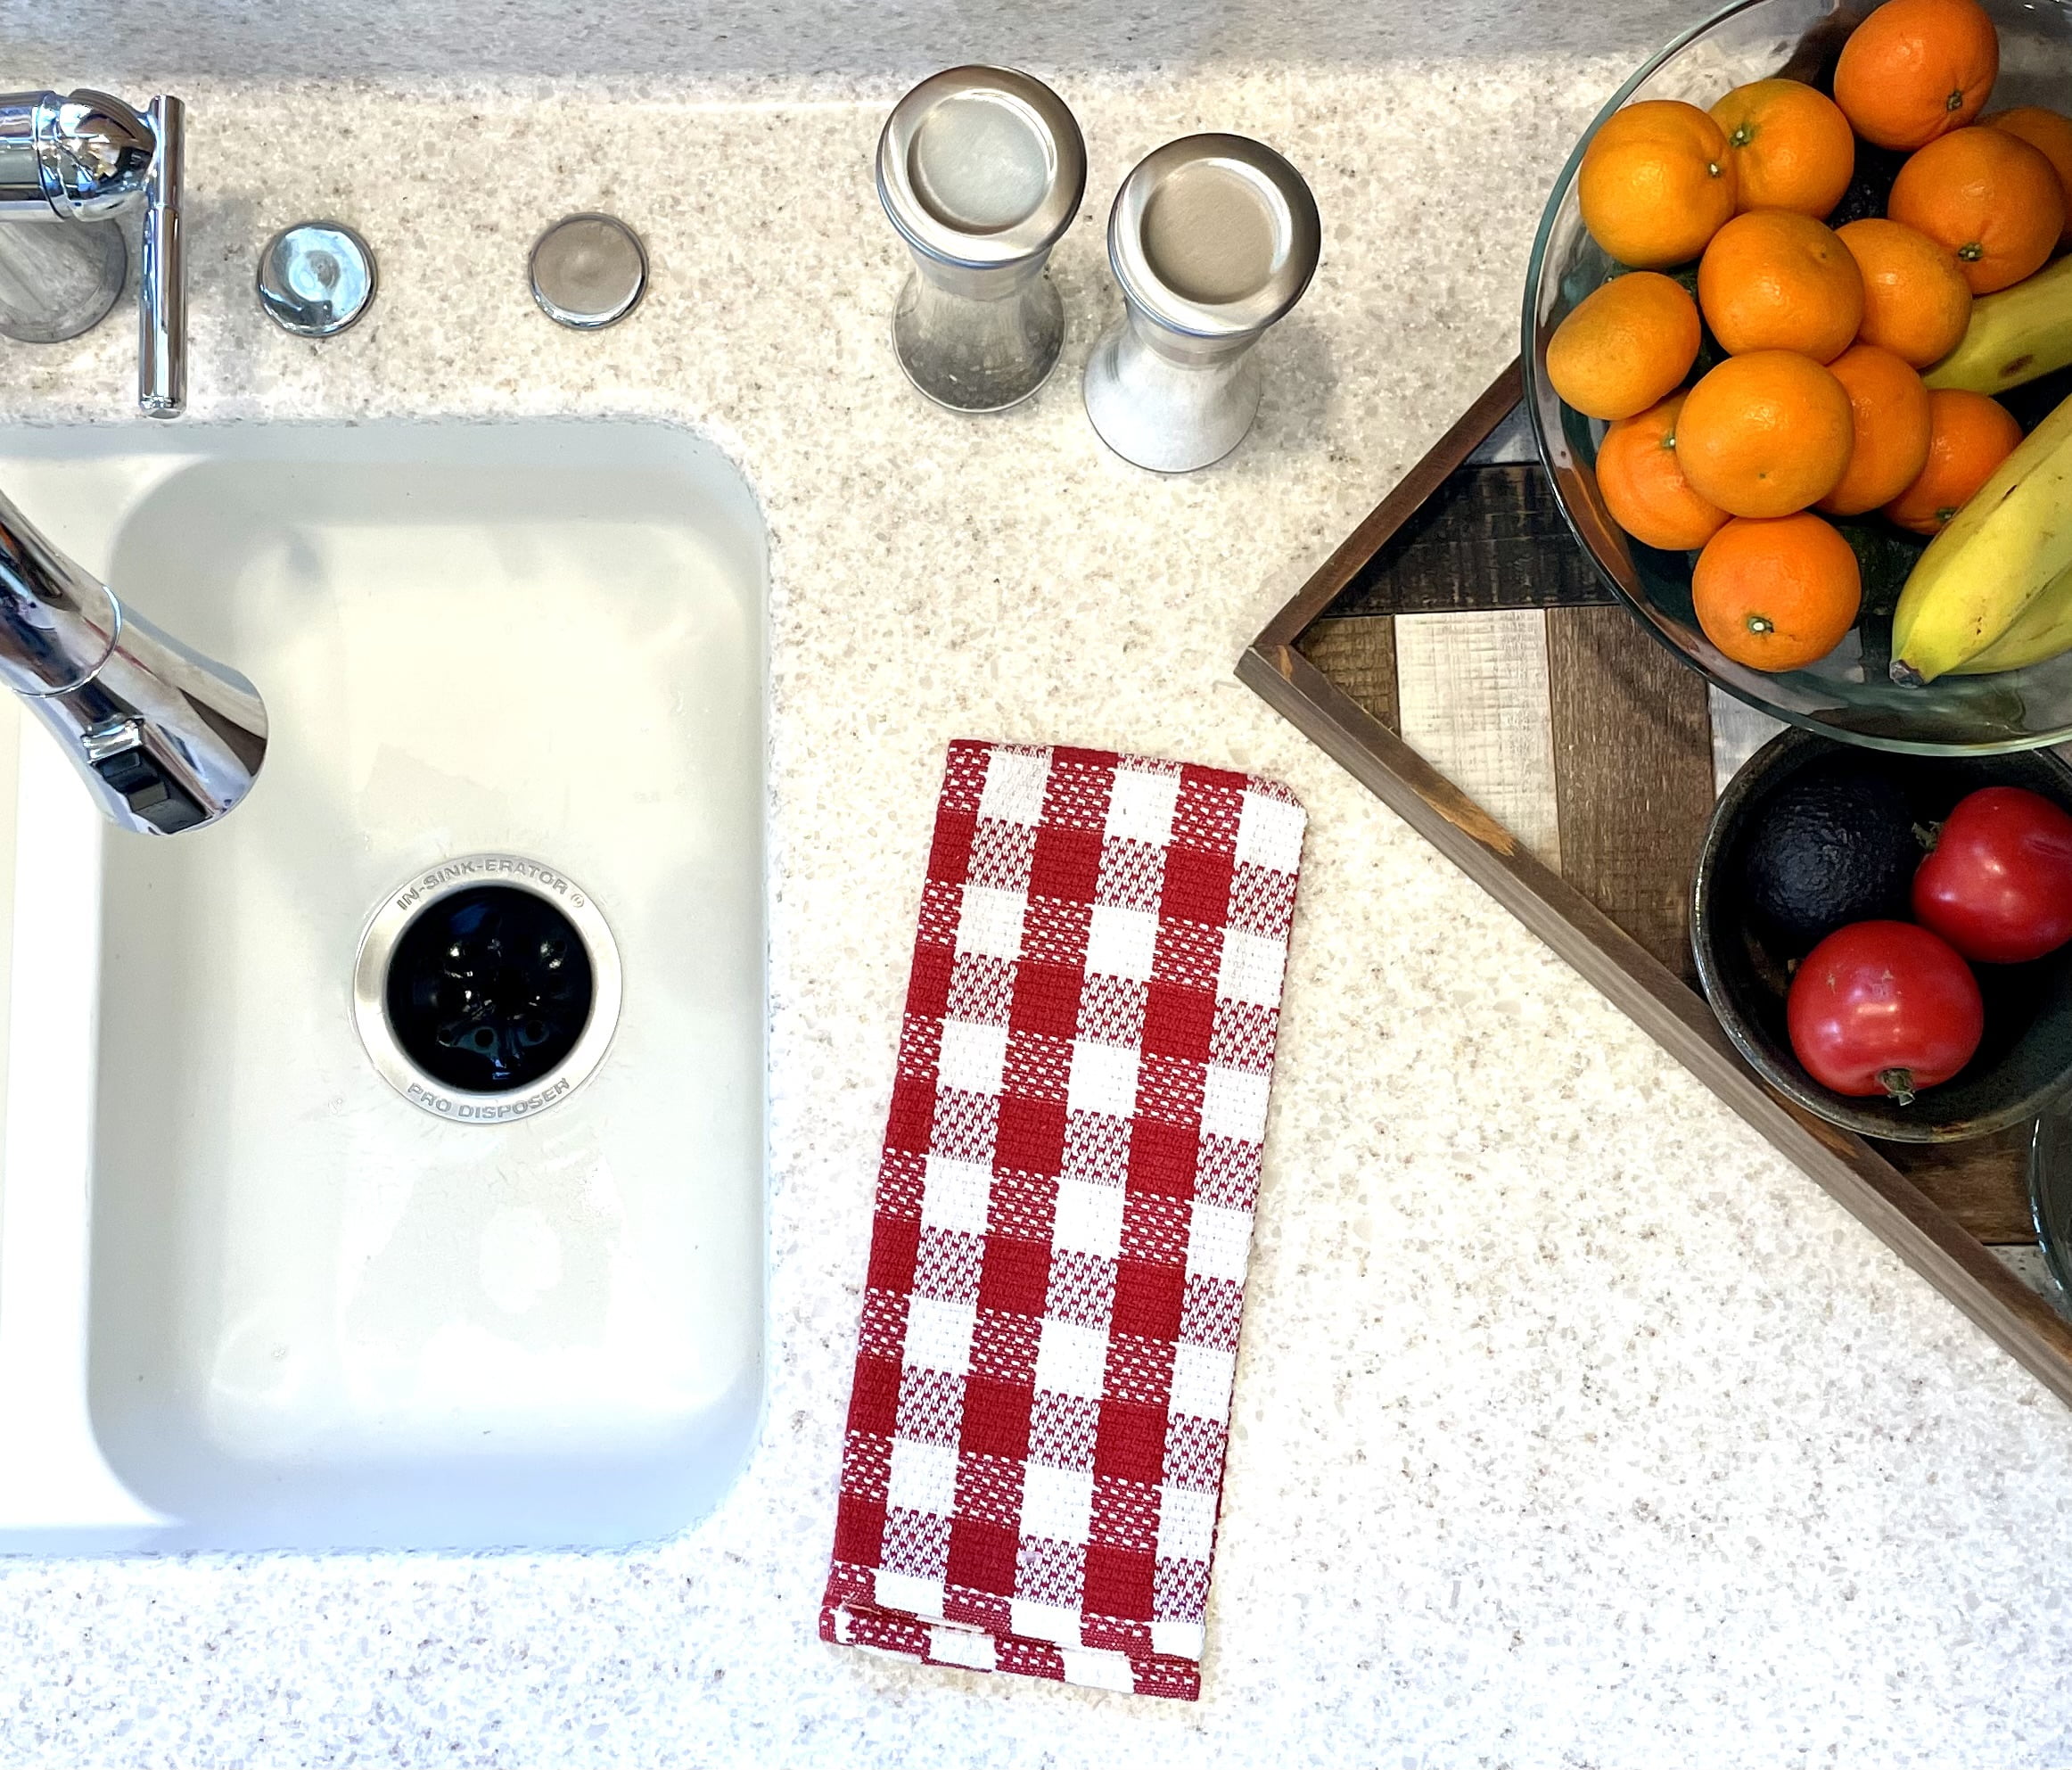 Food Network™ Buffalo Check Kitchen Towel & Dishcloth 6-pk.